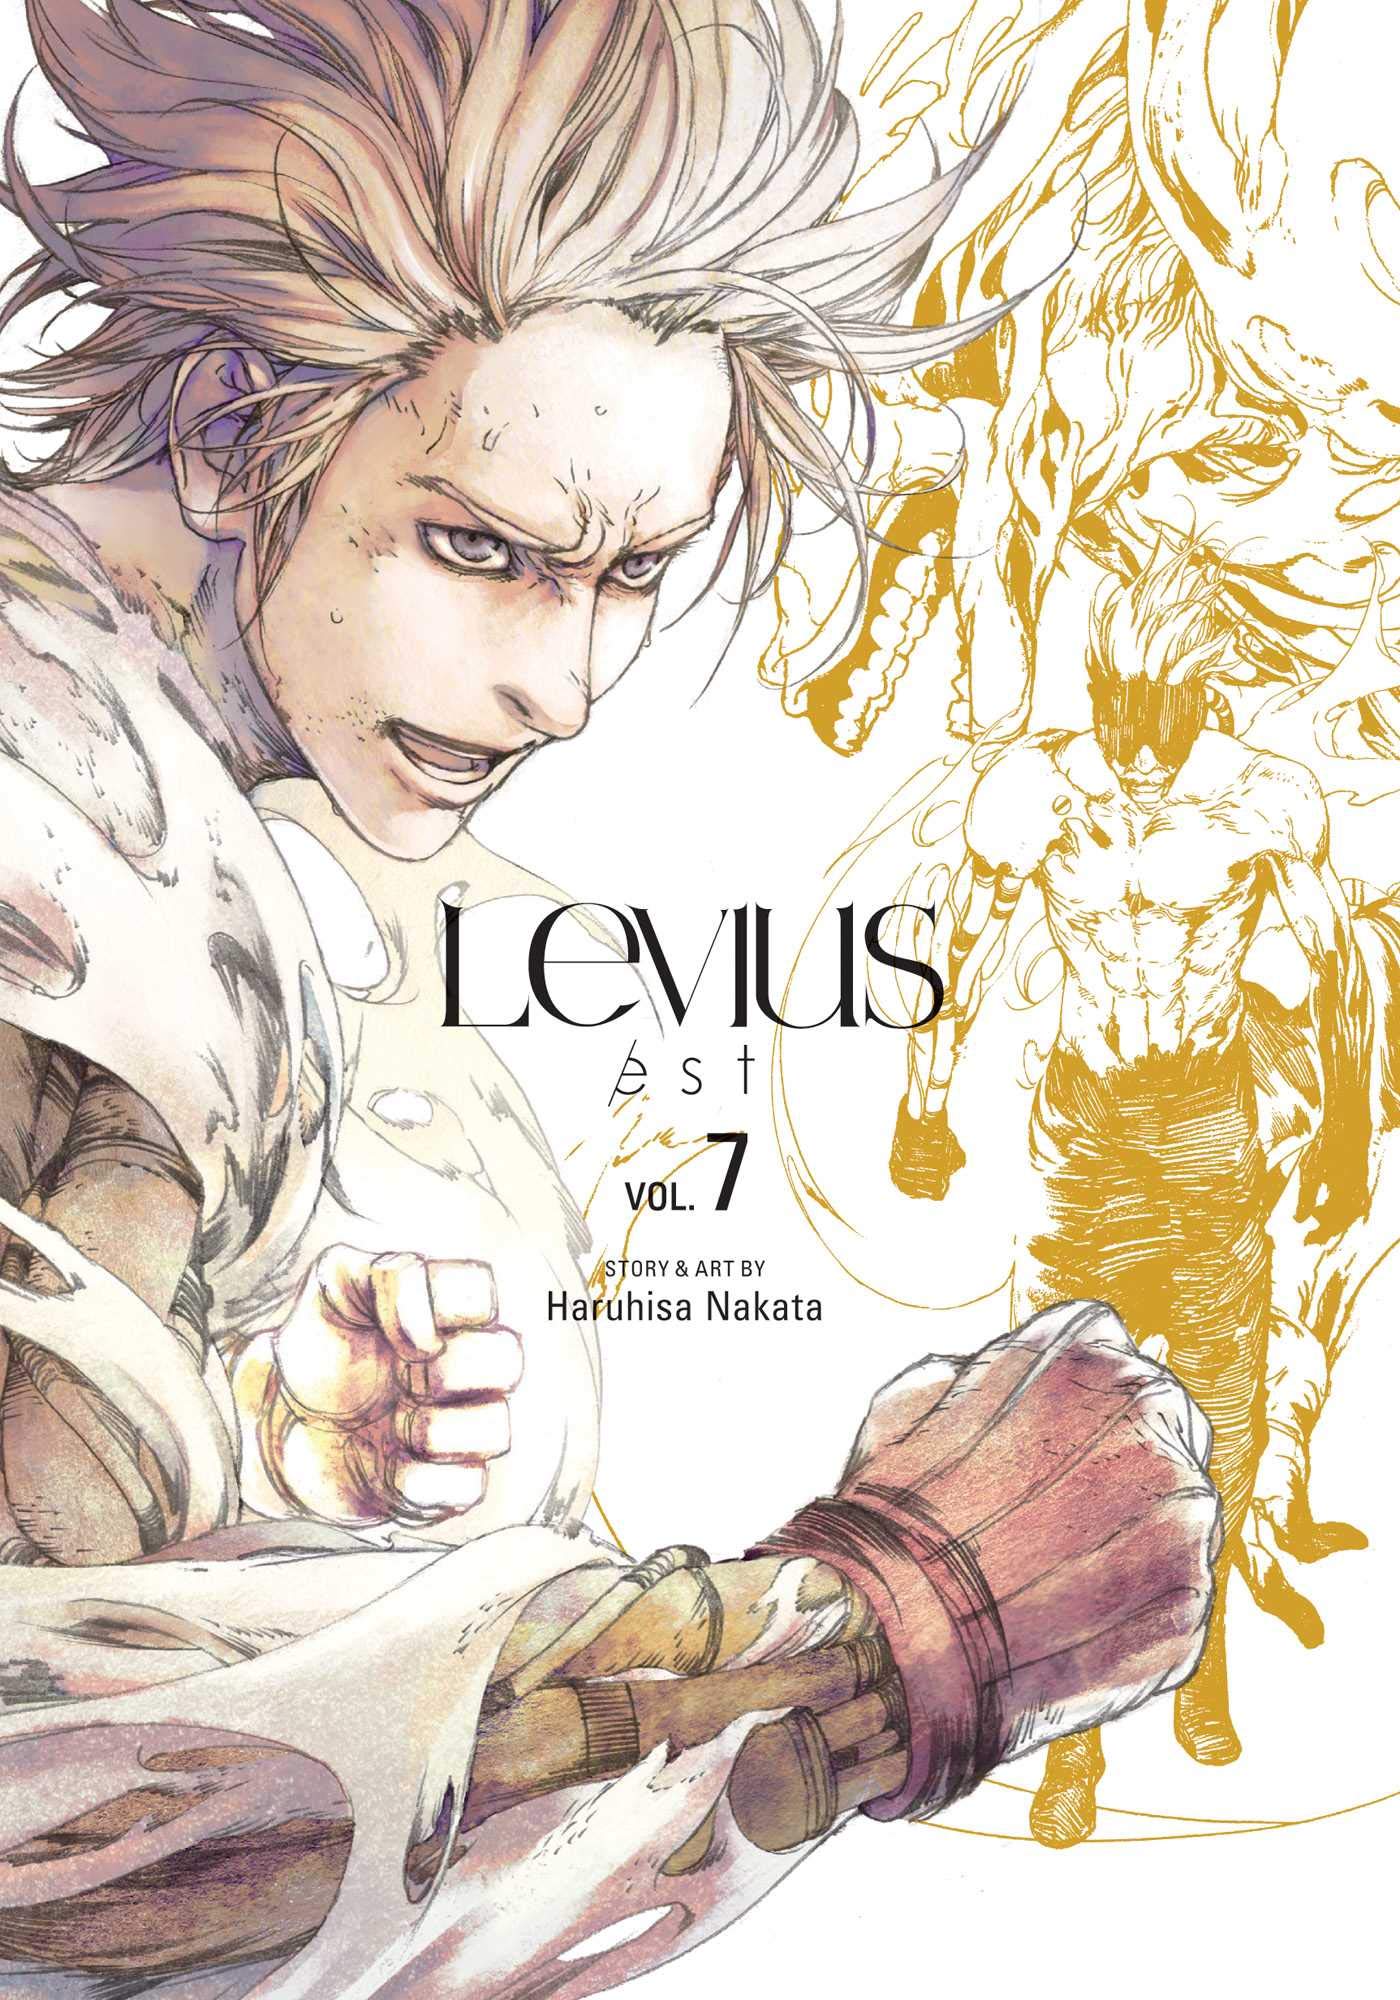 Levius/est - Volume 7 | Haruhisa Nakata